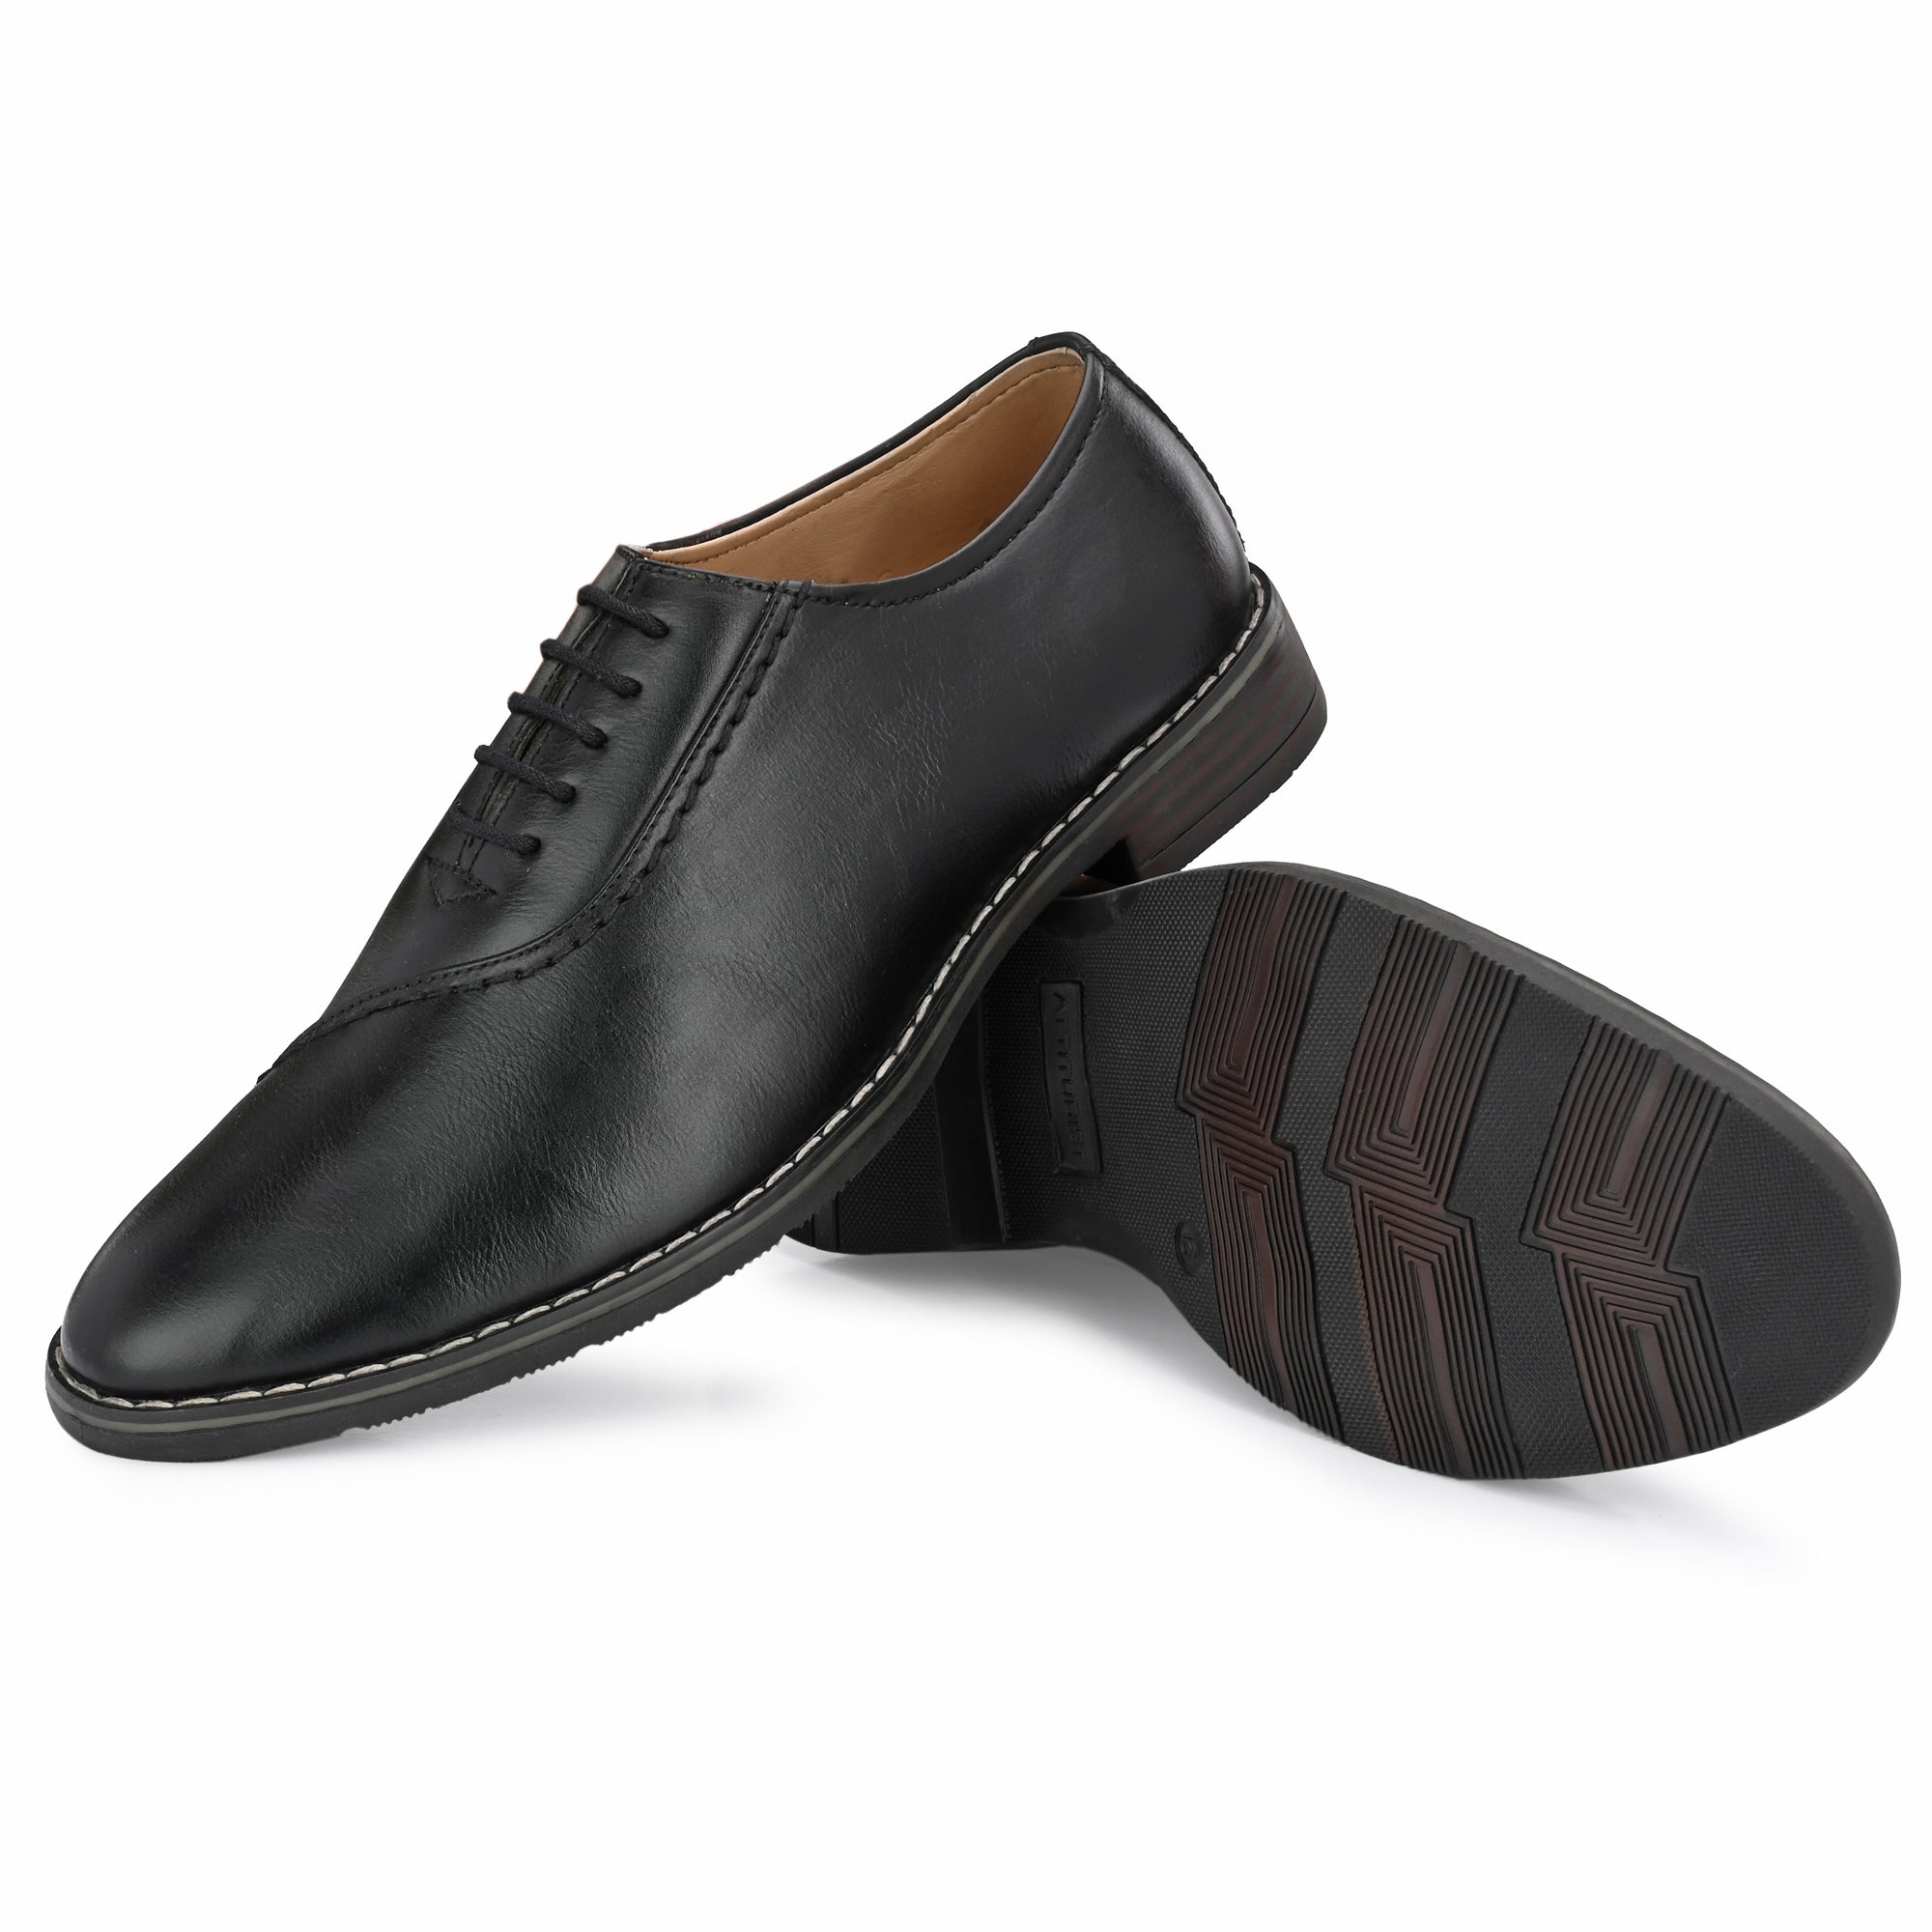 black-formal-lace-up-attitudist-shoes-for-men-with-design-sp5a